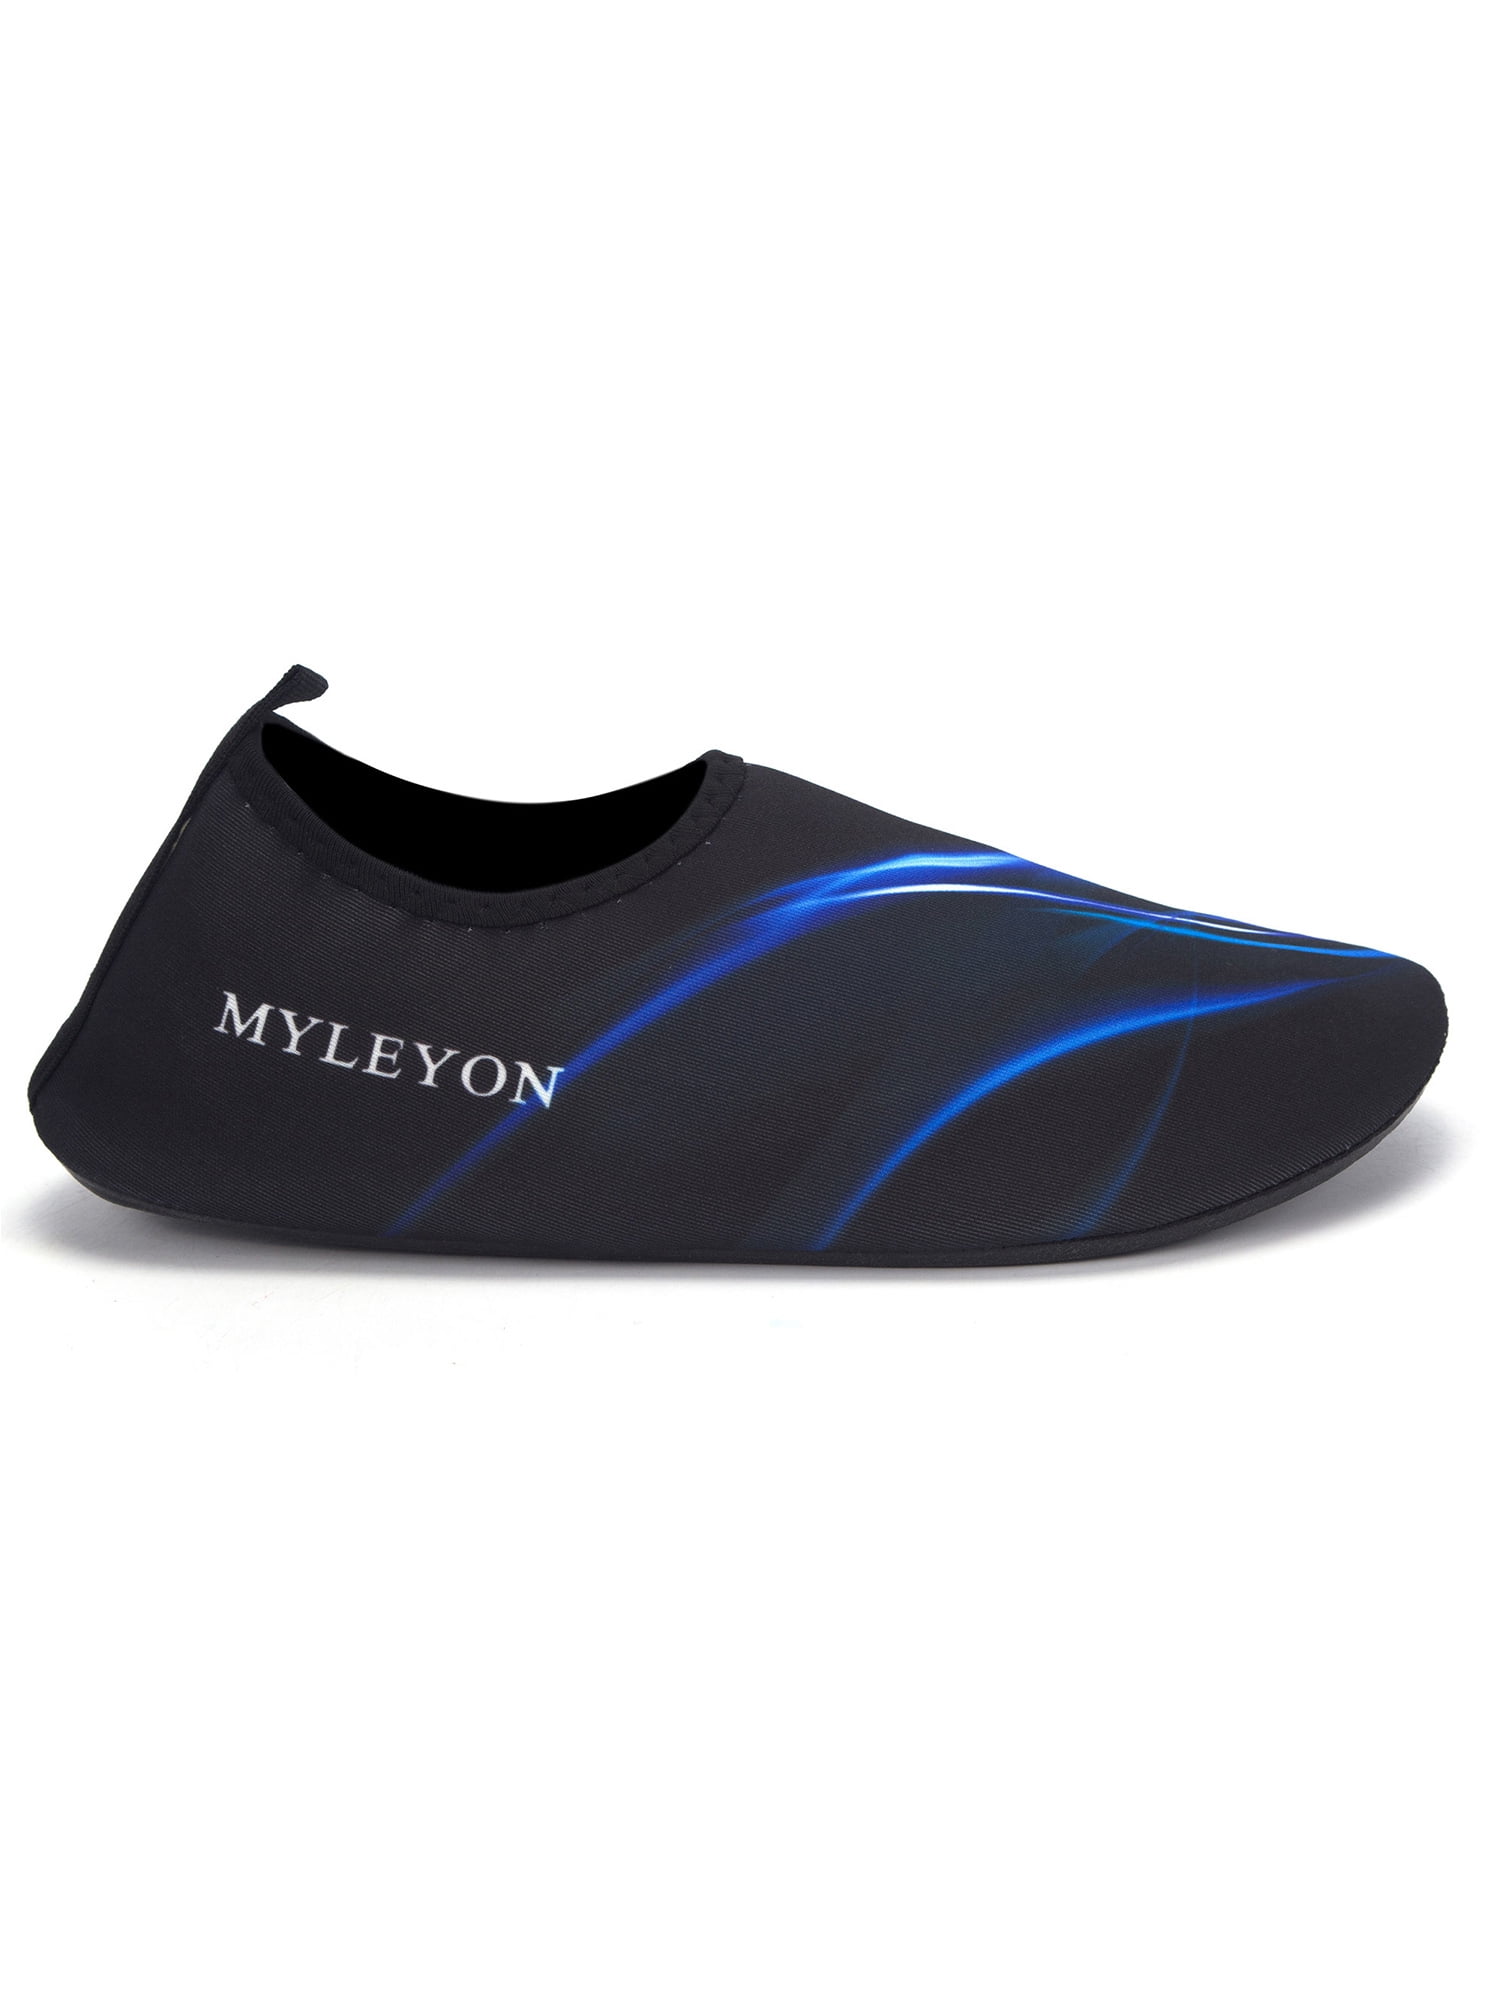 myleyon shoes